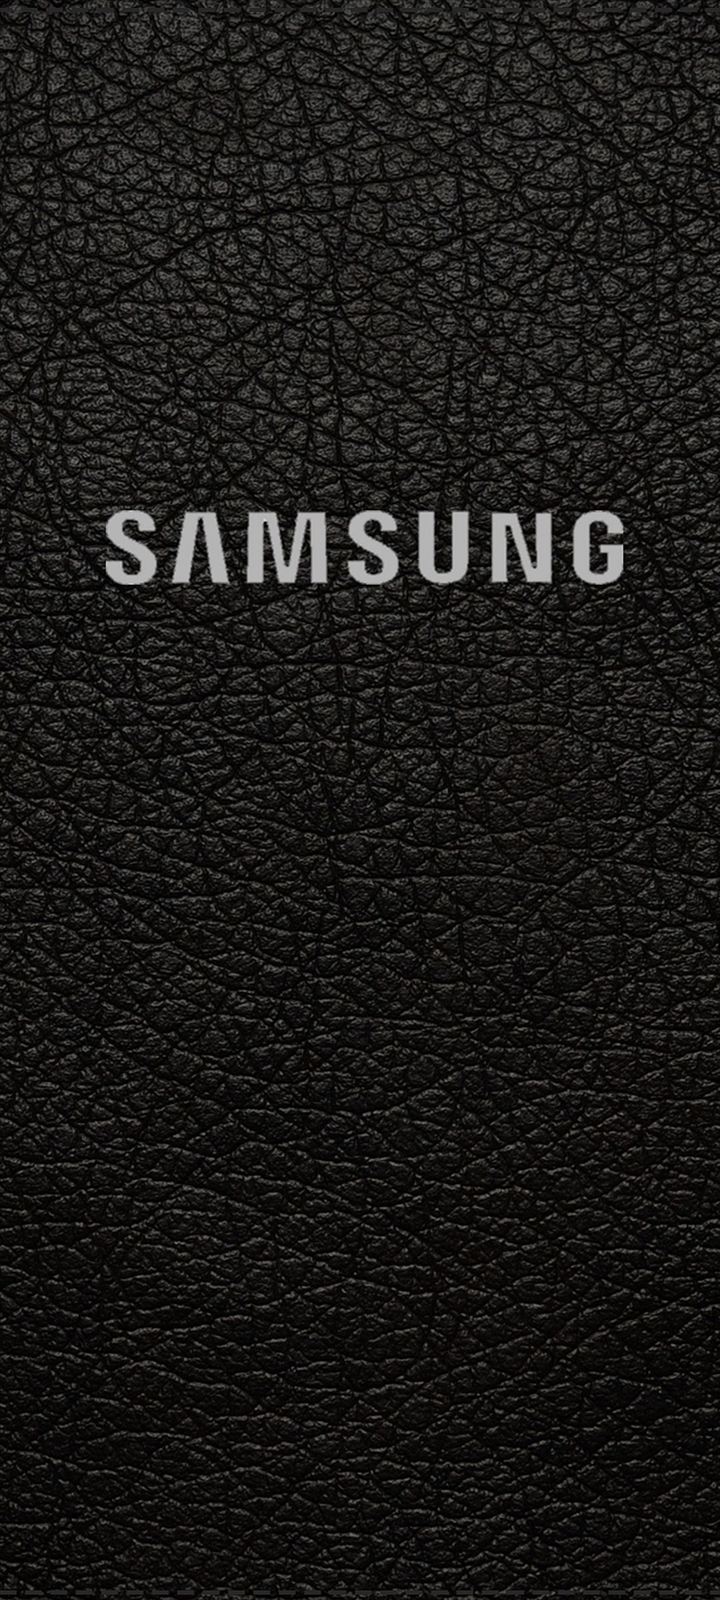 Samsung レザー 黒 革 Moto G8 Power Lite Androidスマホ壁紙 待ち受け スマラン